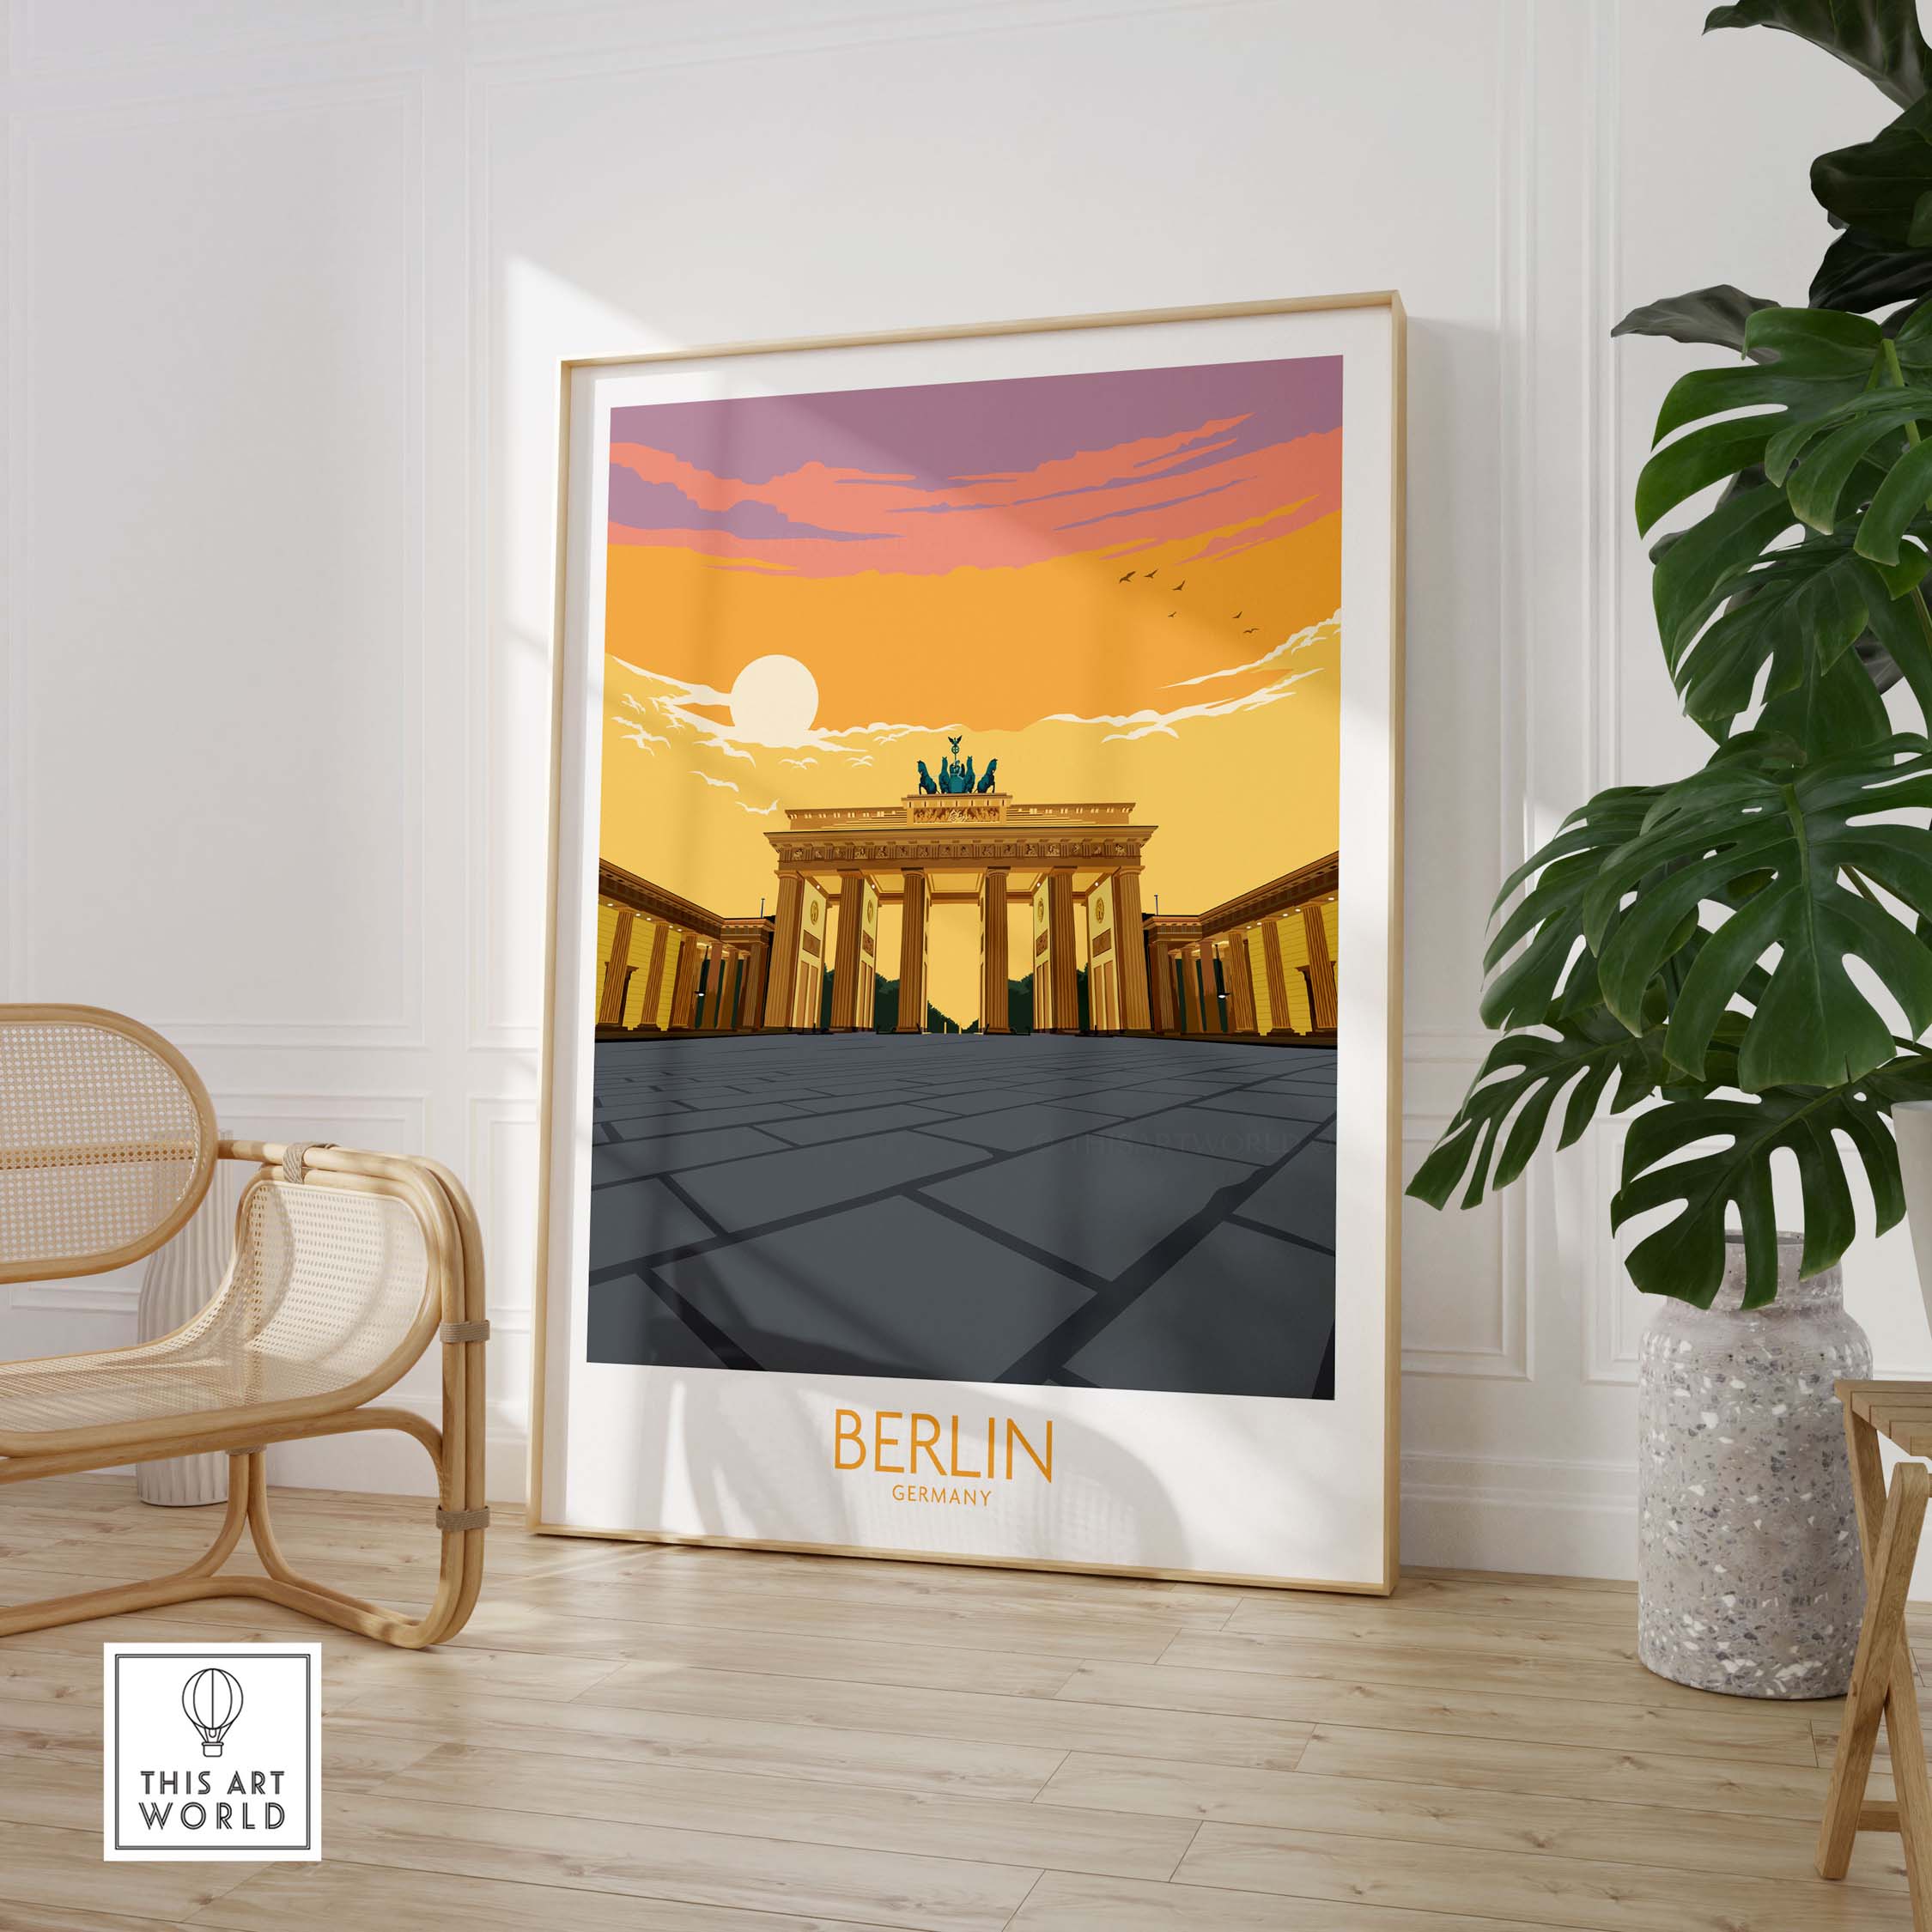 berlin print germany travel poster